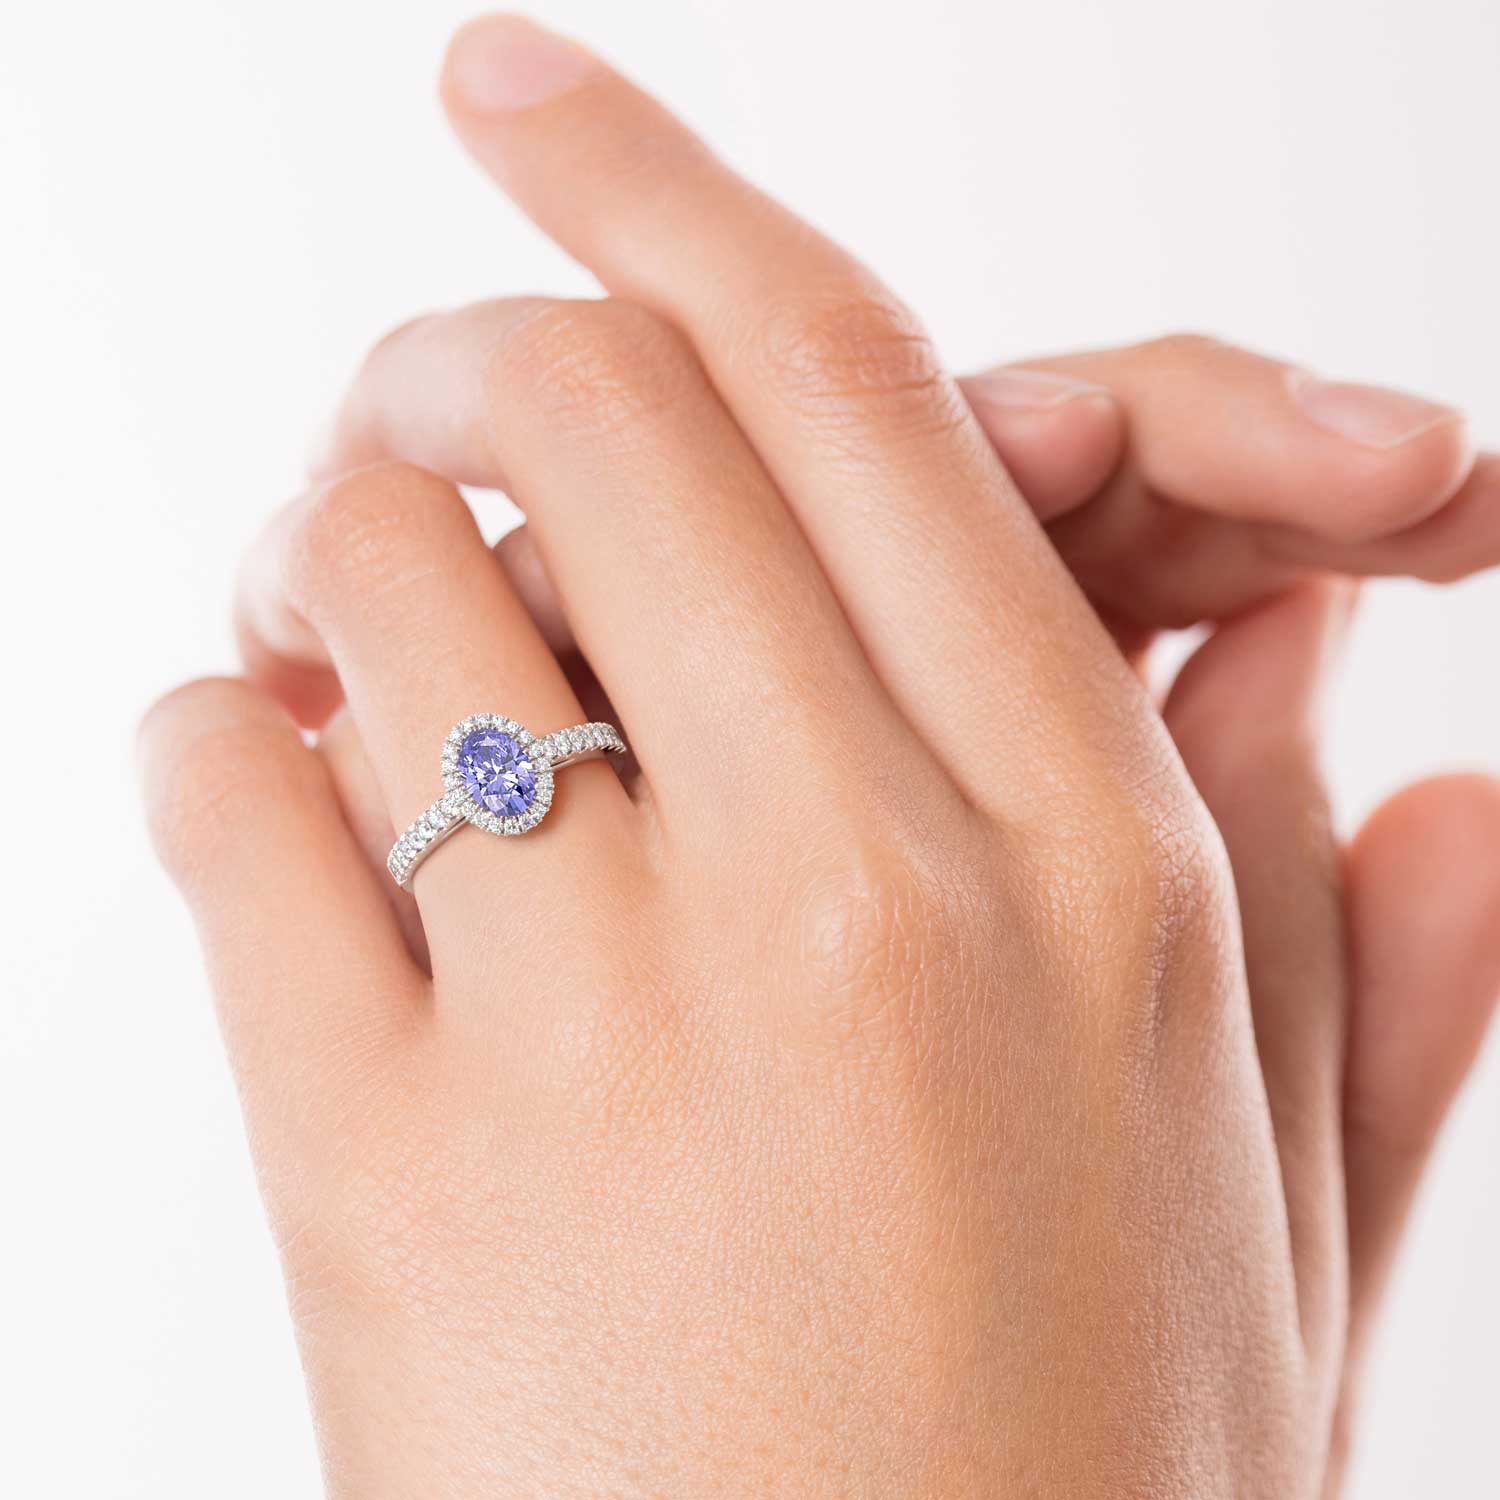 A mesmerizing tanzanite gemstone ring, showcasing its enchanting violet-blue hues and elegant design, elegantly displayed on a finger.